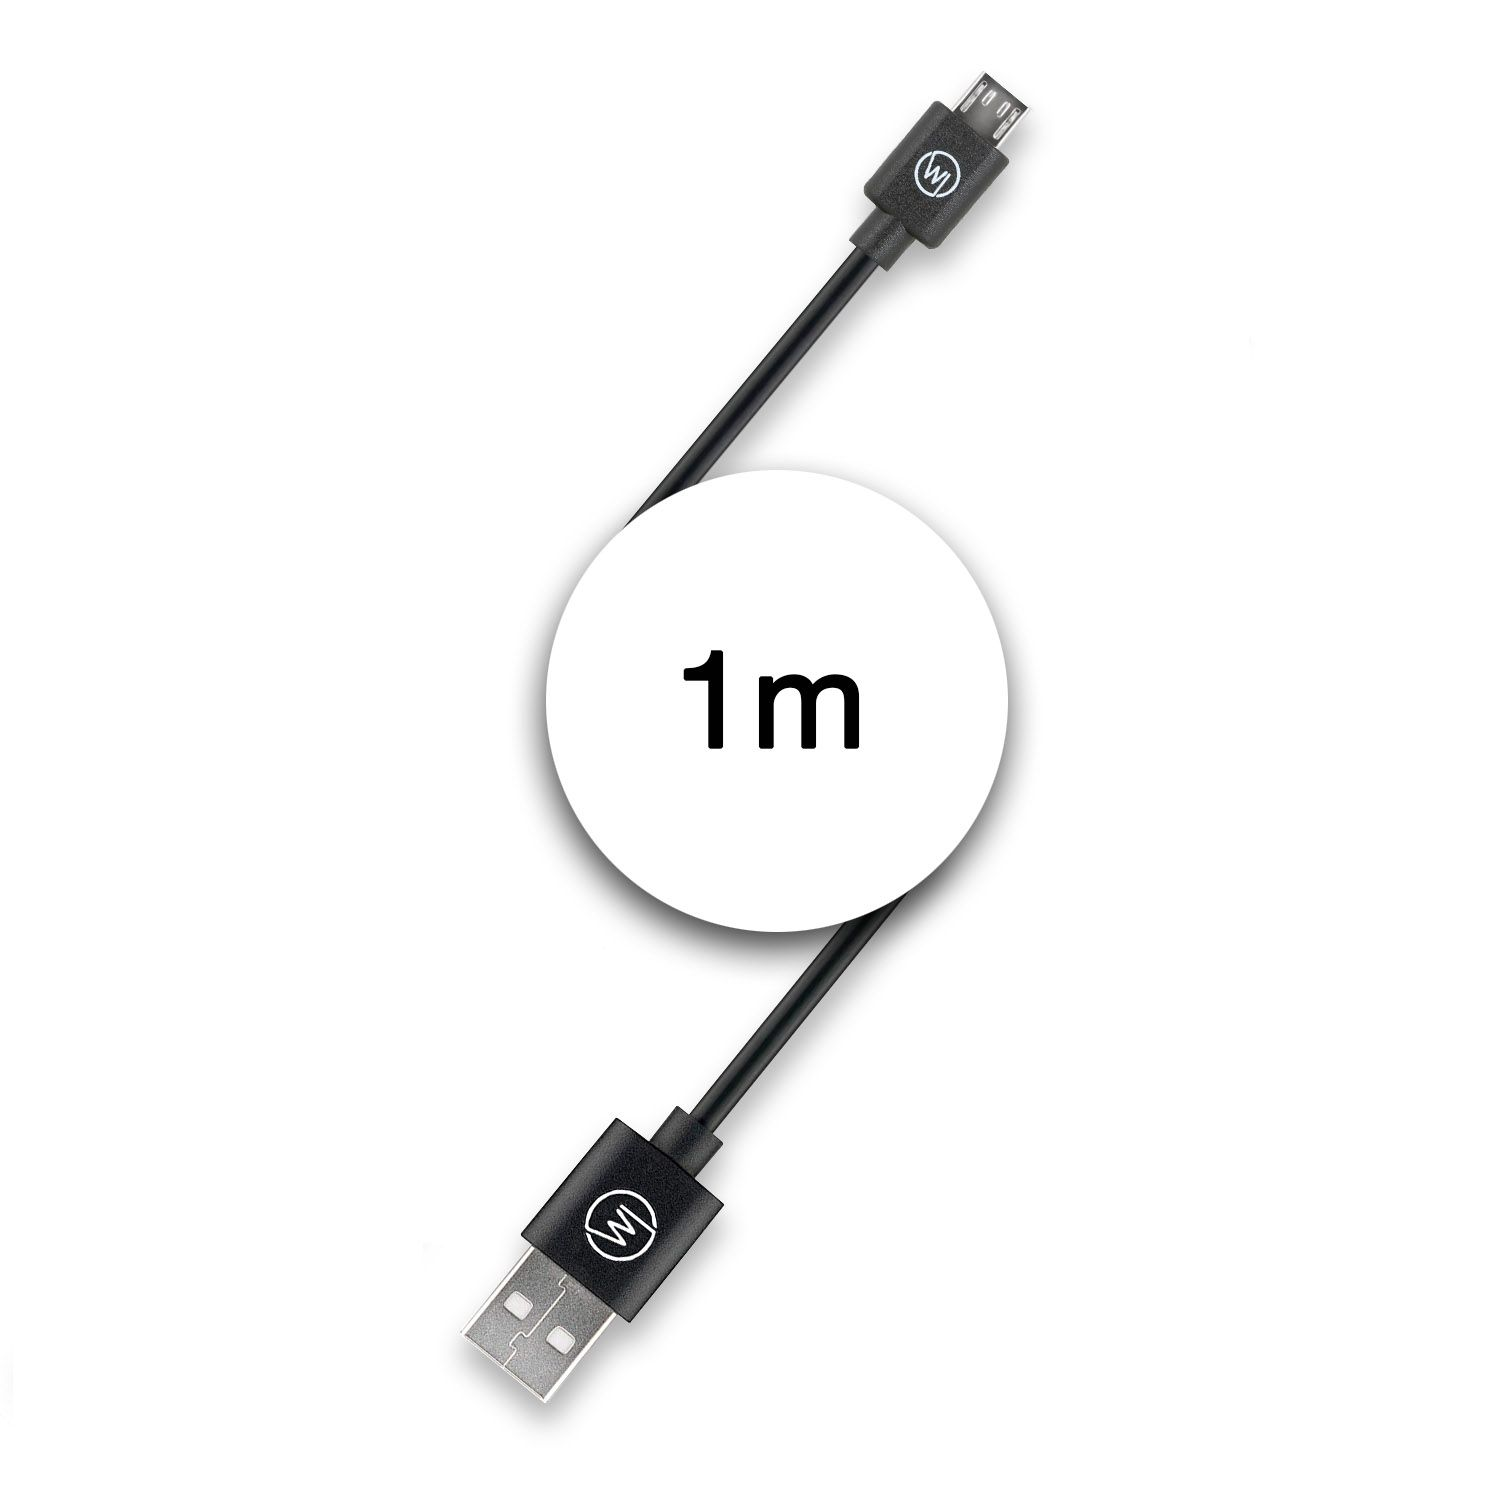 MicroUSB CHILI Ladekabel, 2S, K830, Logitech MX 1 m, Anywhere für Ladekabel Wireless Keyboard Master Illuminated 2S, schwarz WICKED MX